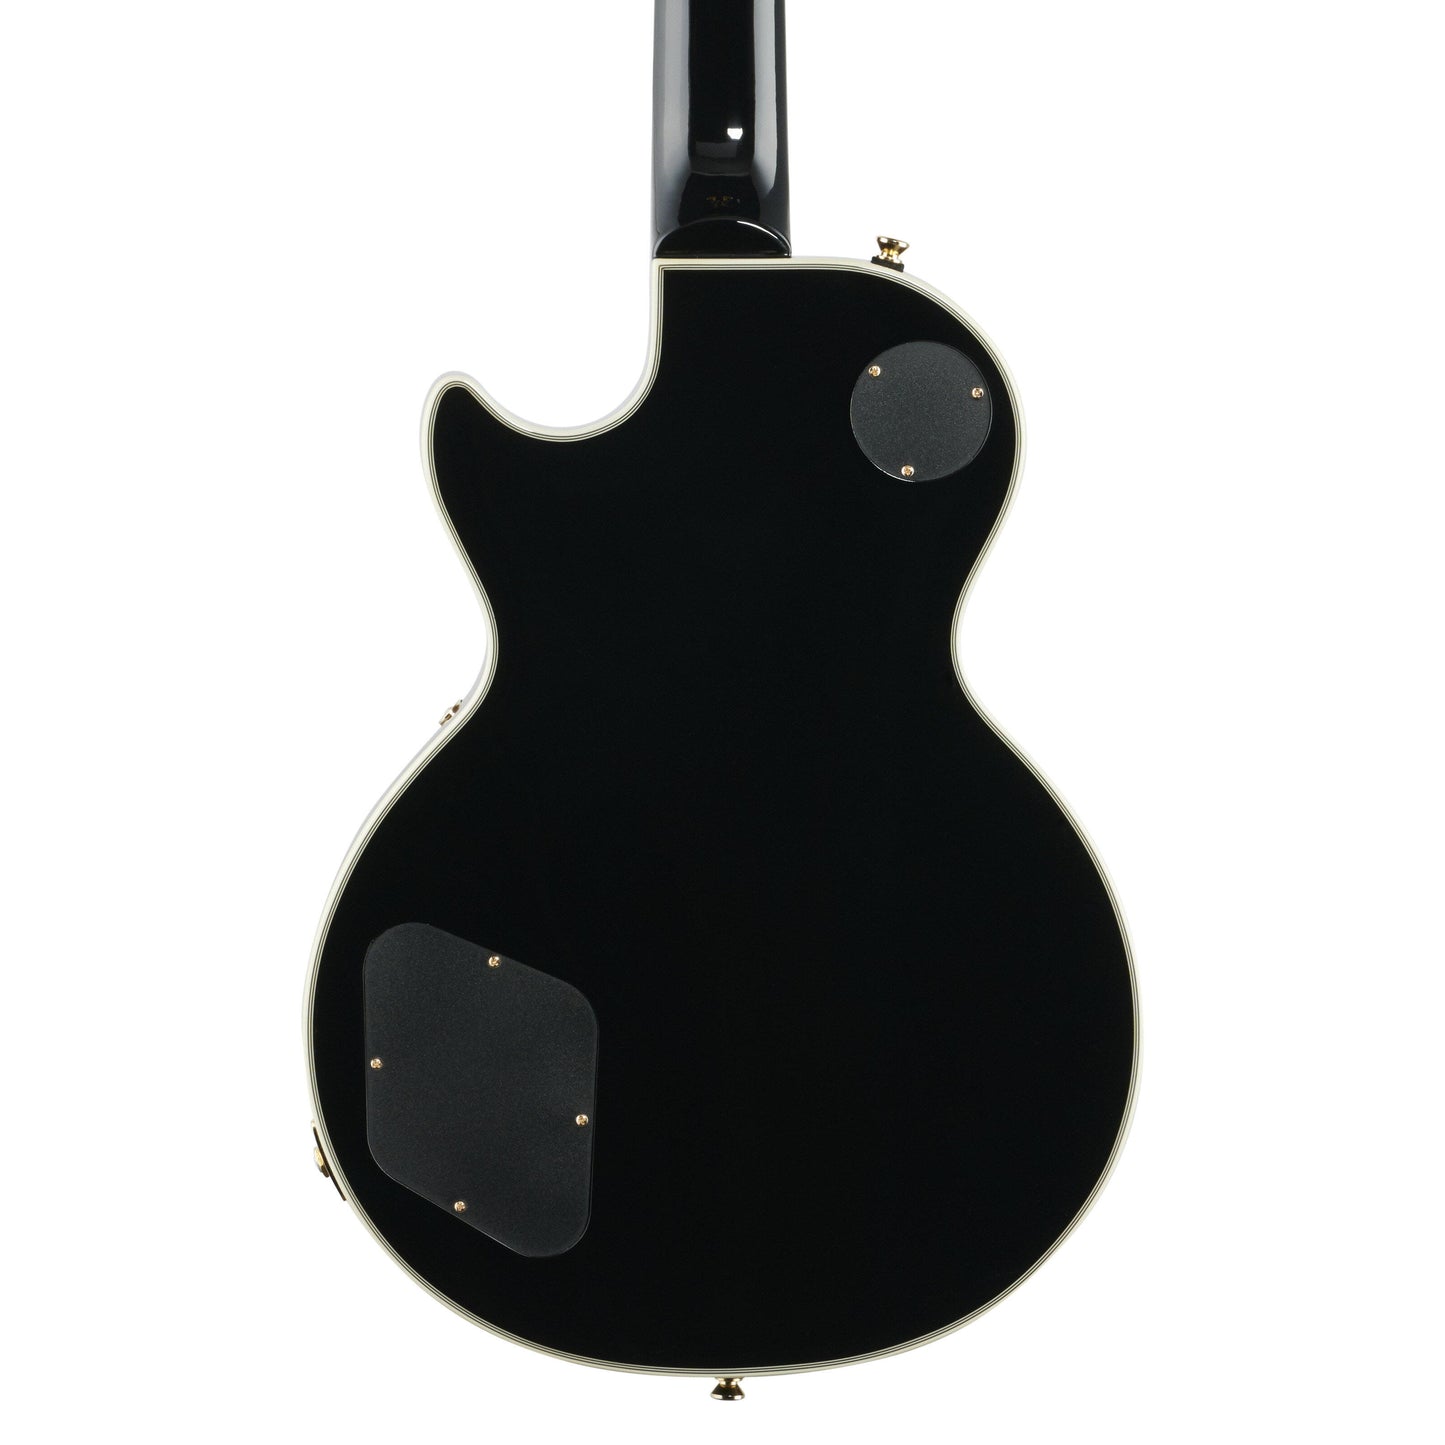 Epiphone Les Paul Custom Electric Guitar, Ebony, with Gold Hardware